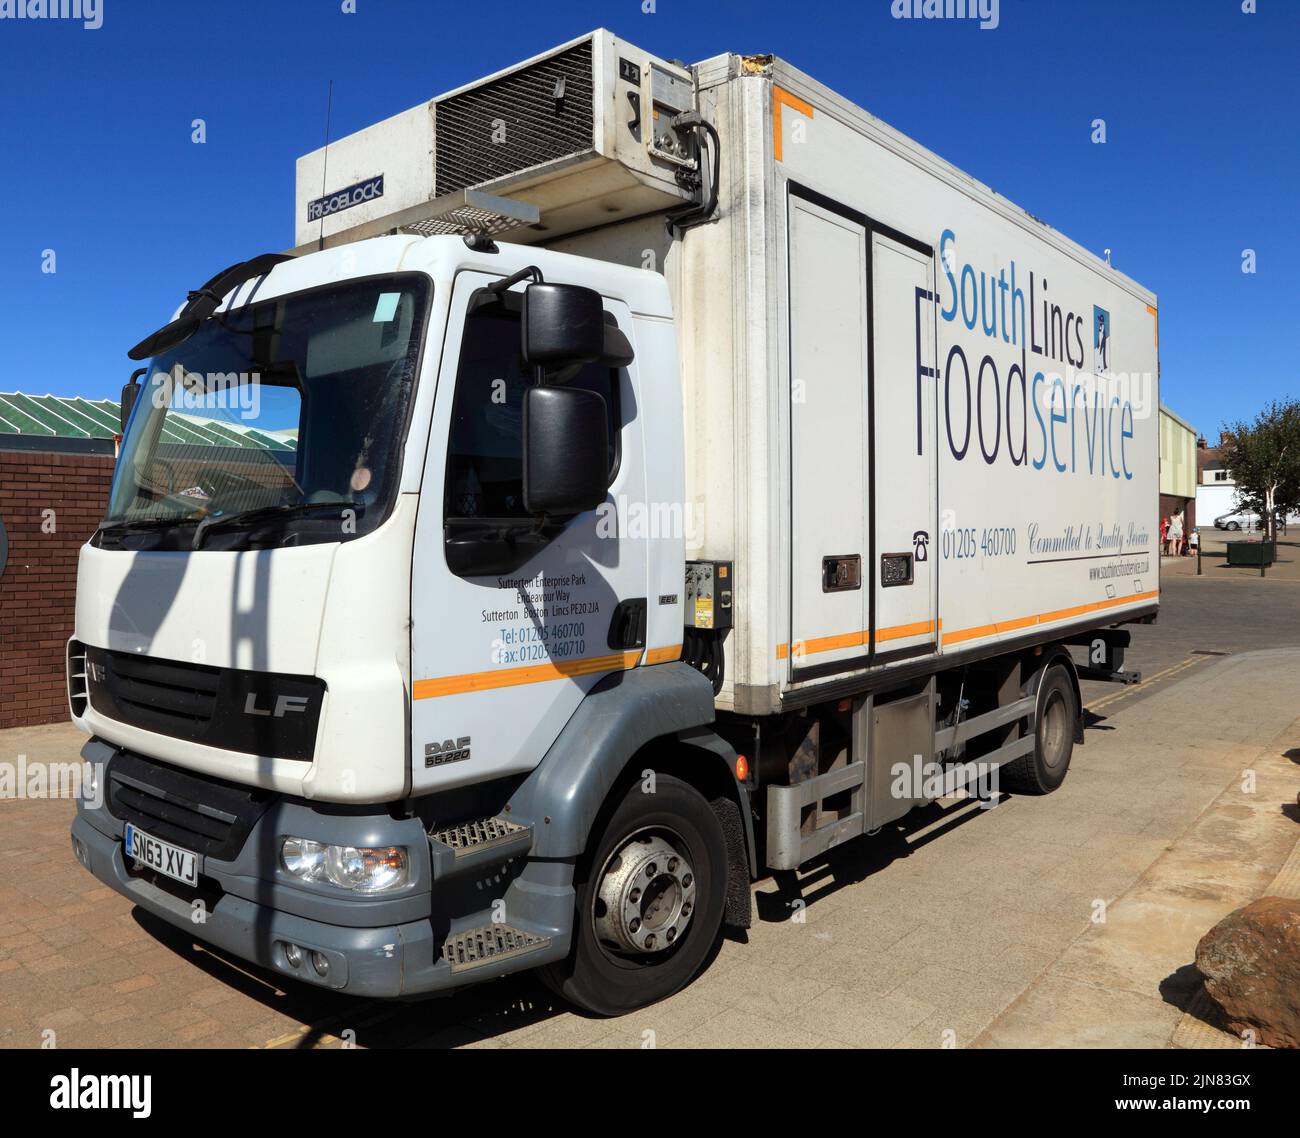 Servicio de comida SouthLincs, vehículo de entrega, camión Foto de stock